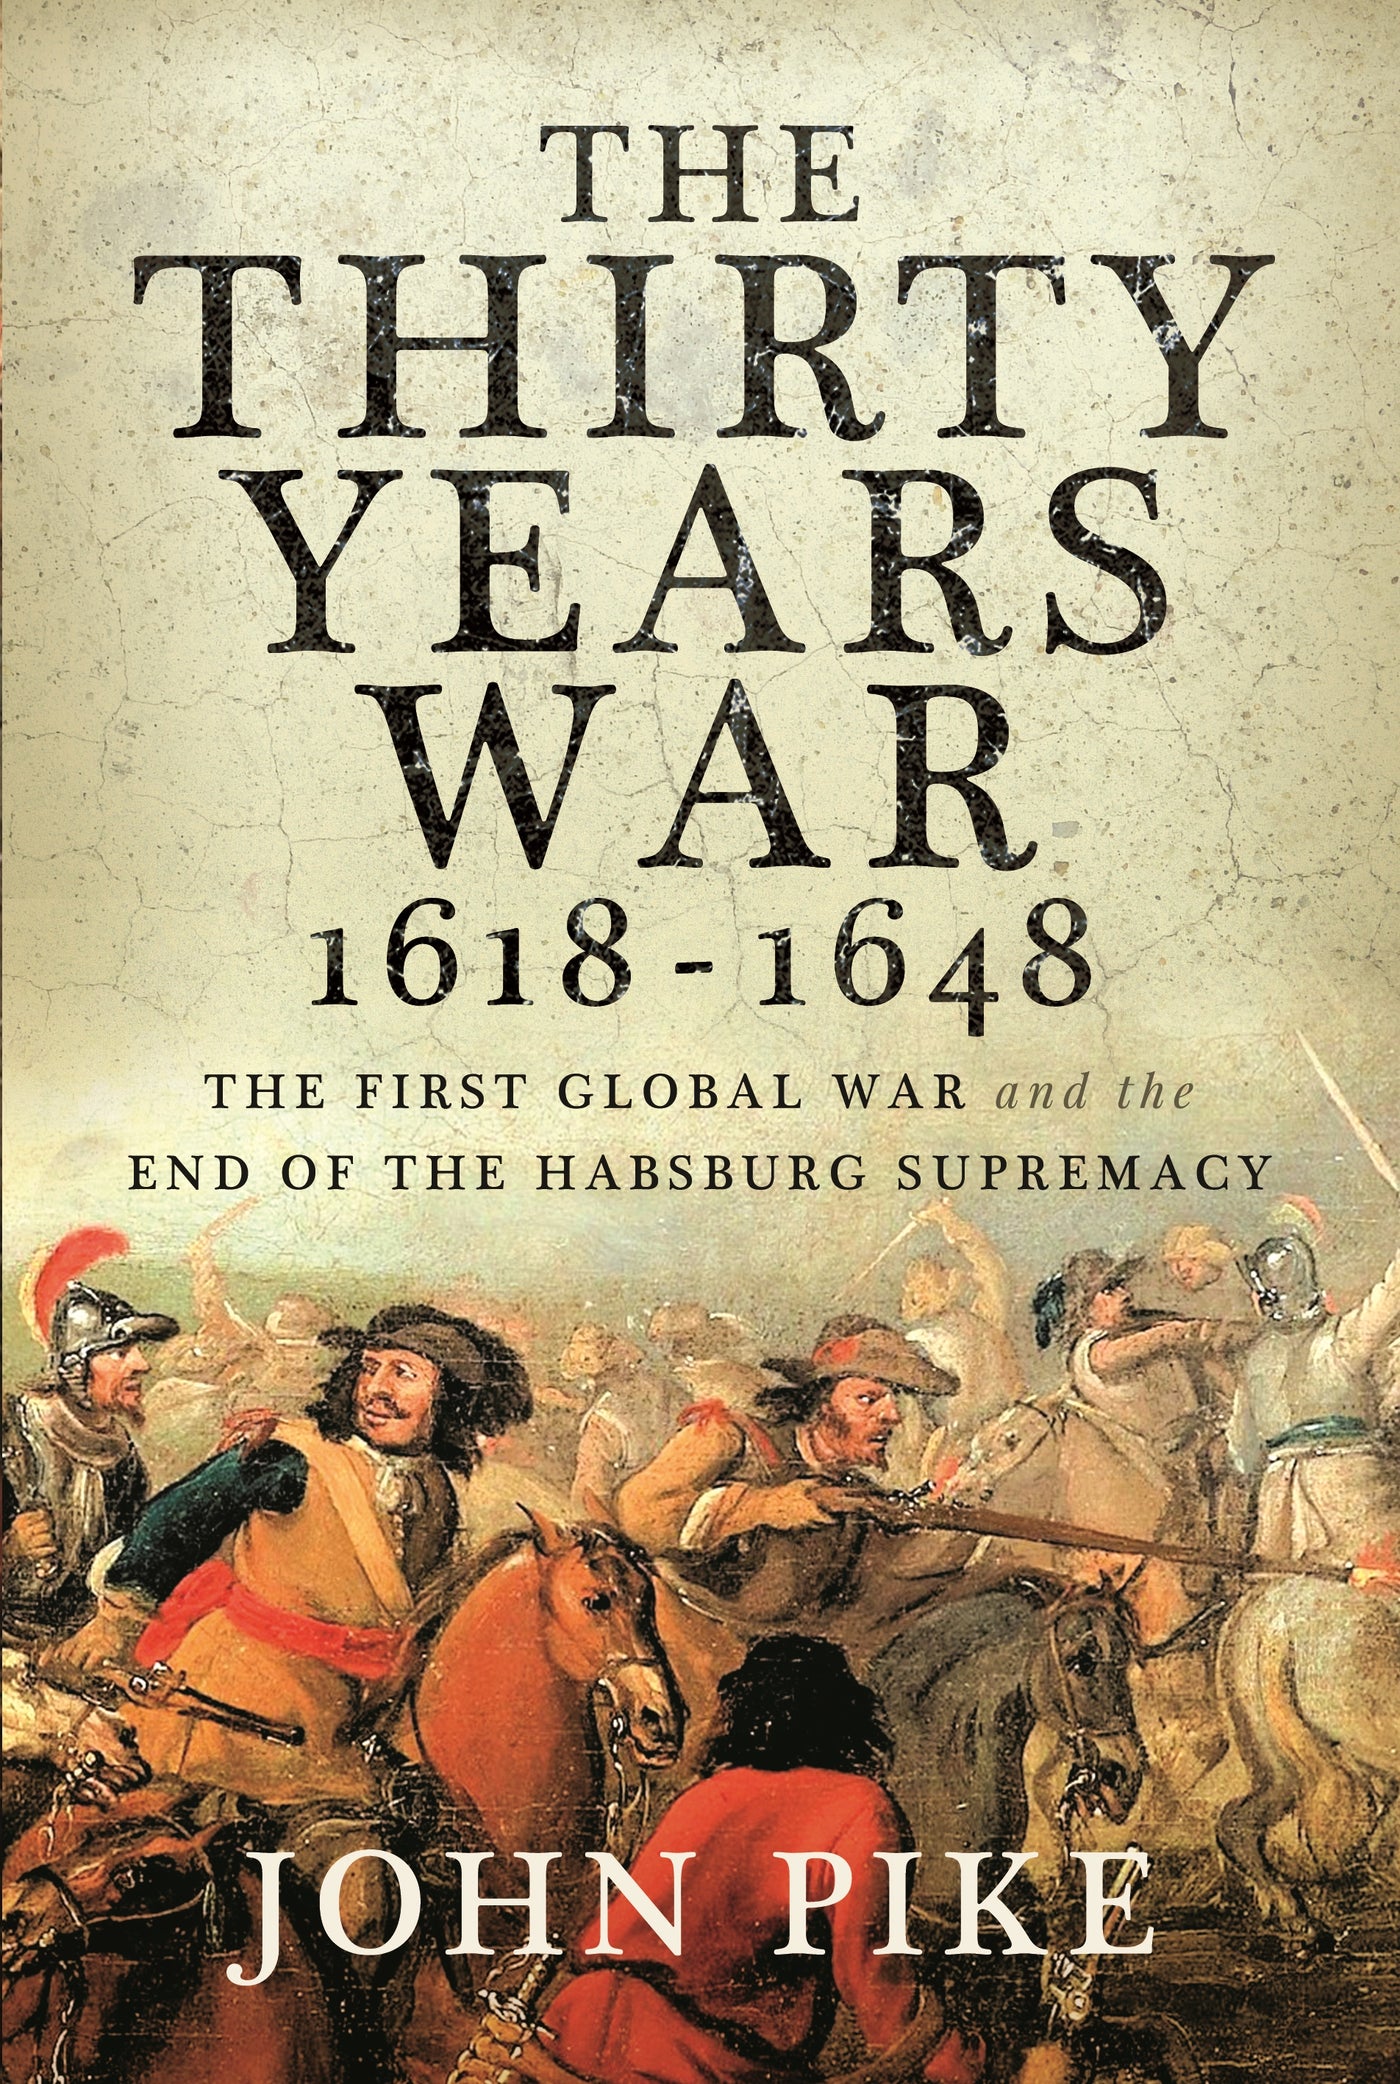 The Thirty Years War, 1618 - 1648